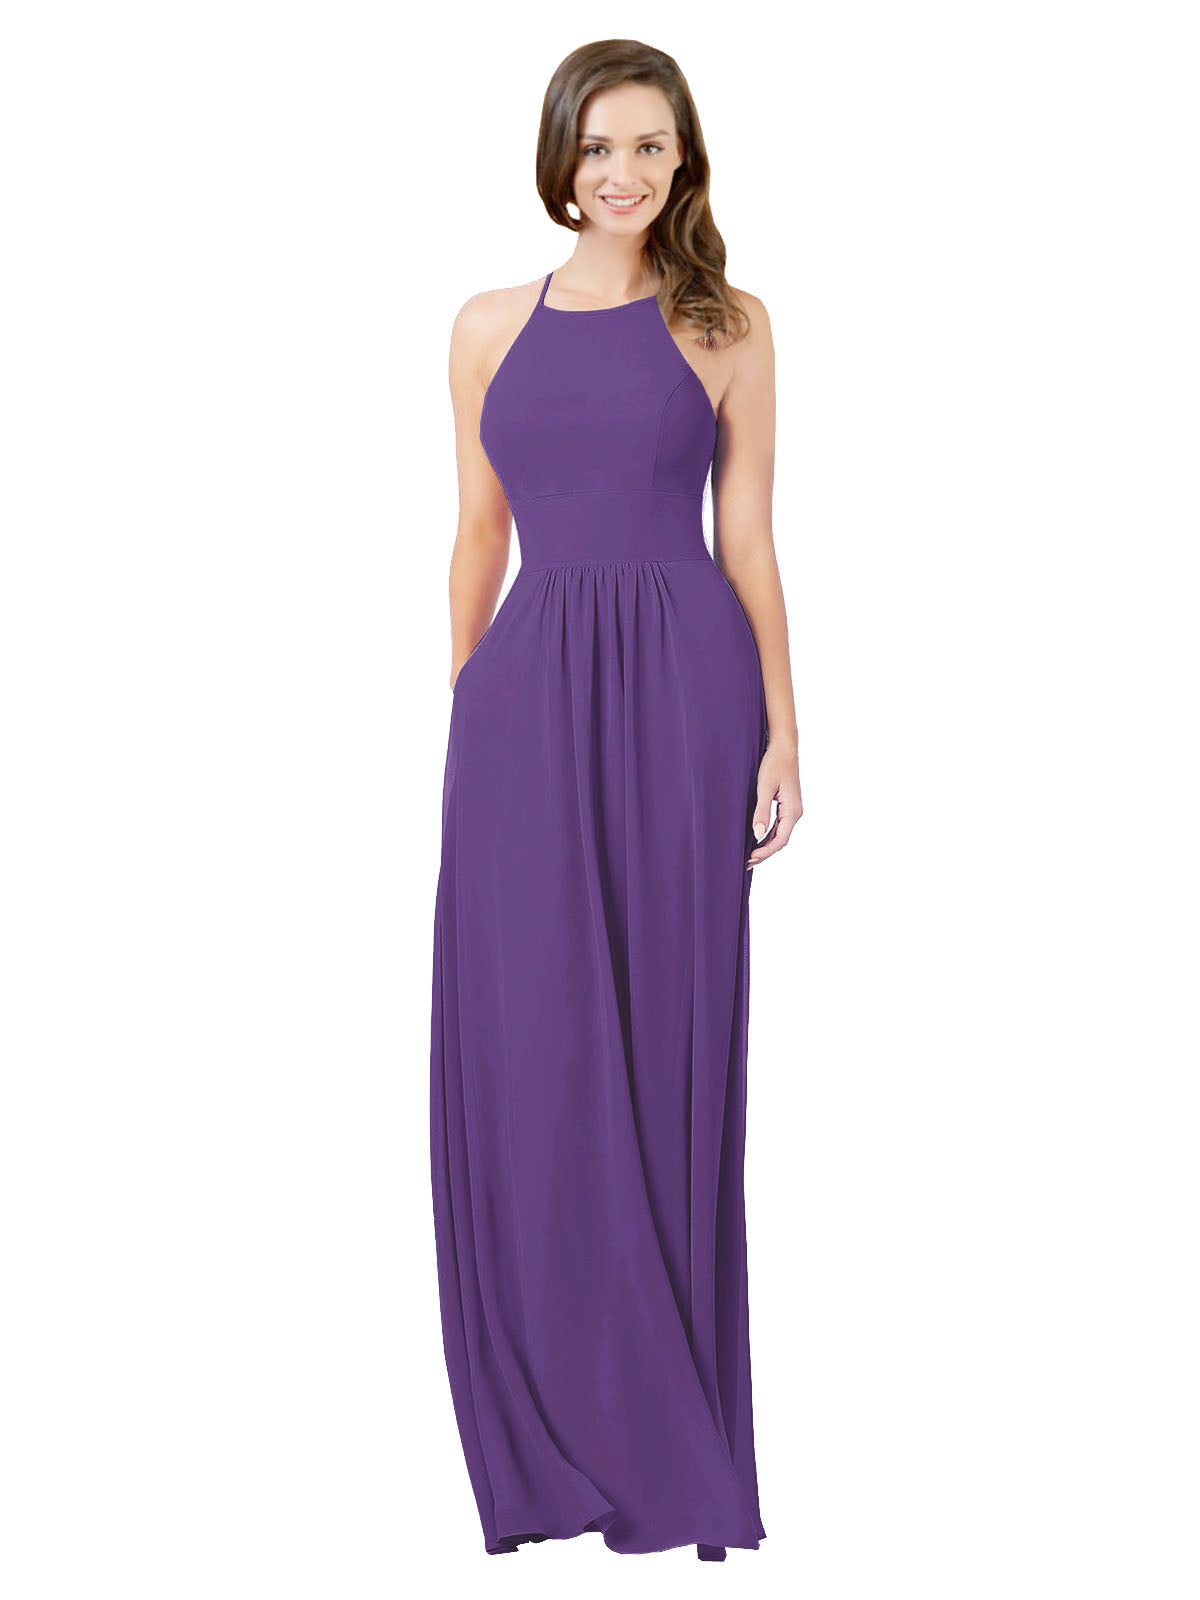 Plum Purple A-Line Halter Sleeveless Long Bridesmaid Dress Cindy